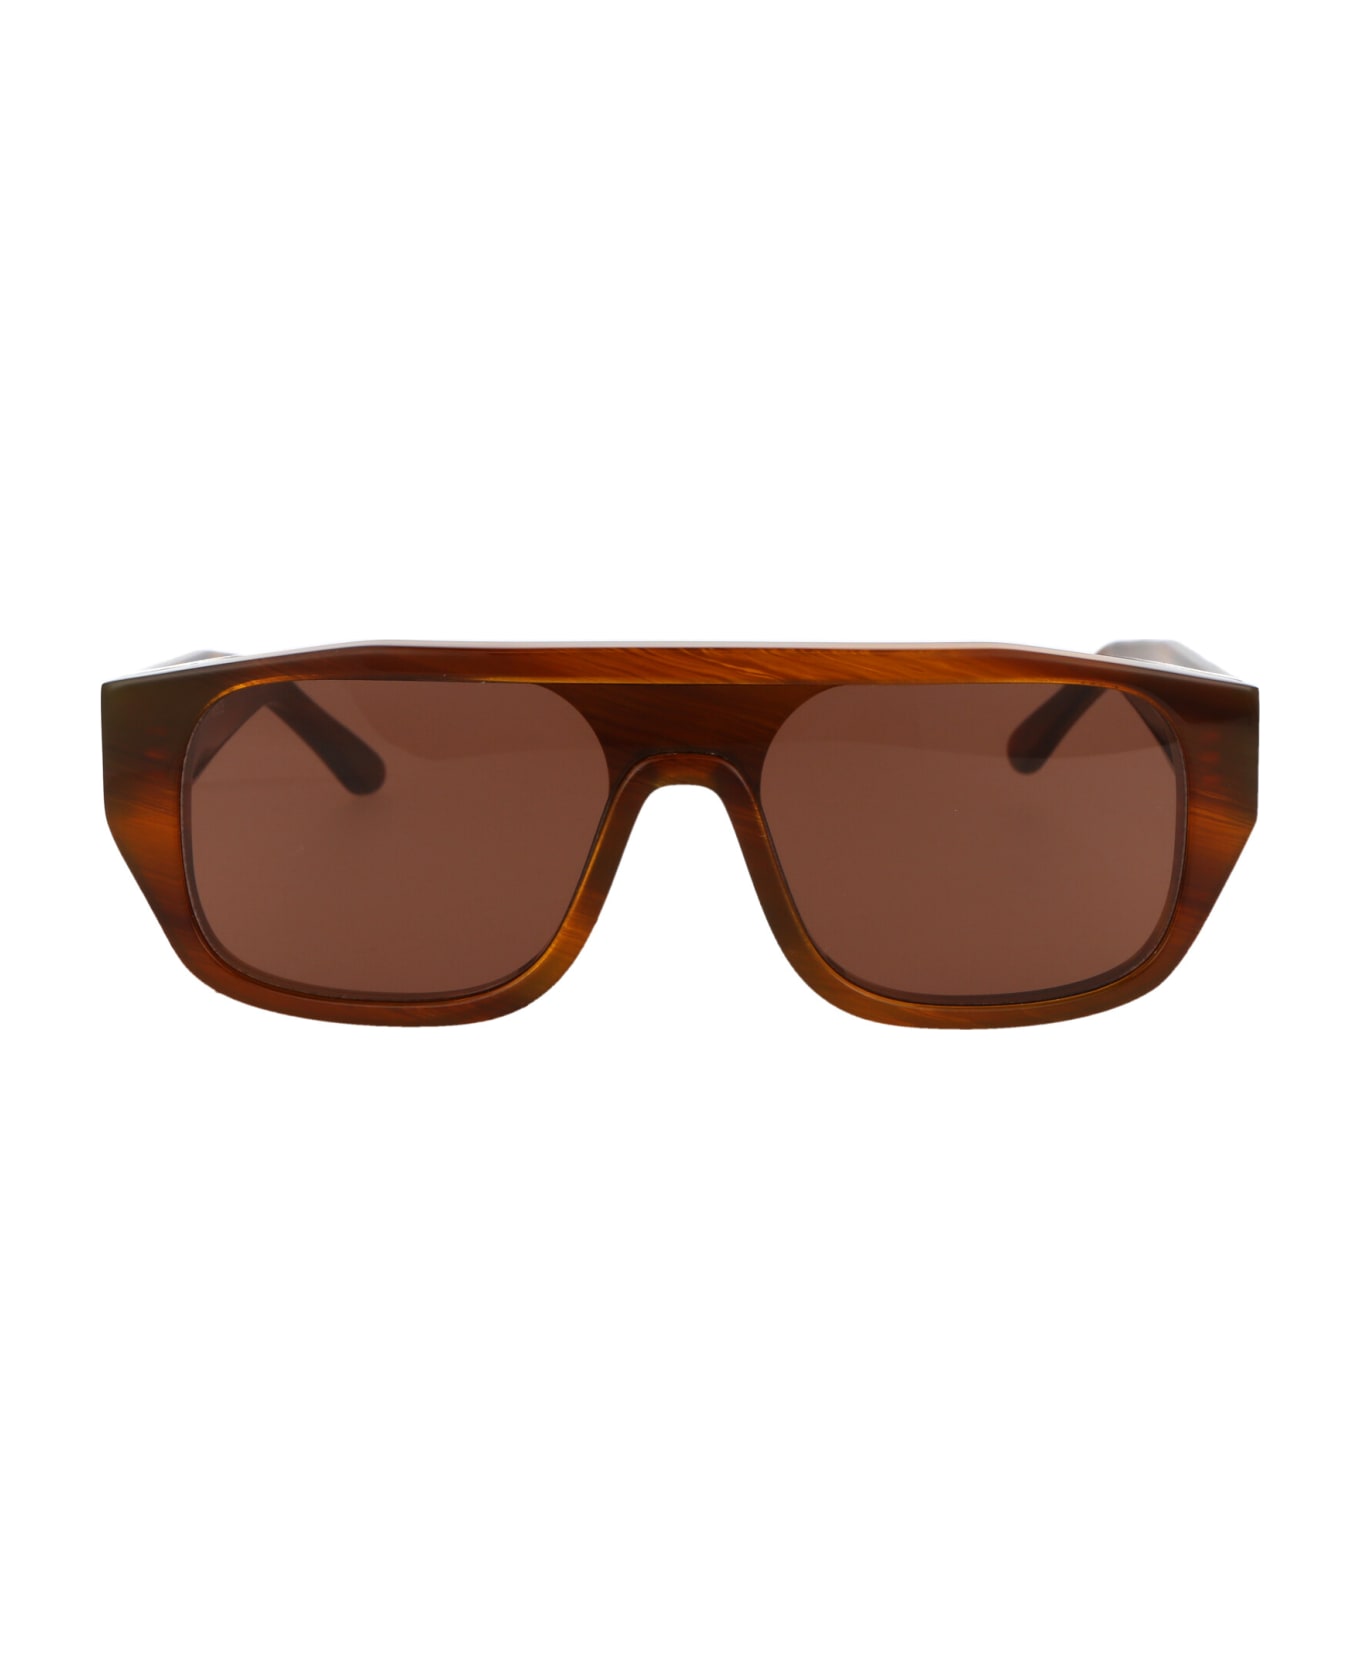 Thierry Lasry Klassy Sunglasses - 821 BROWN